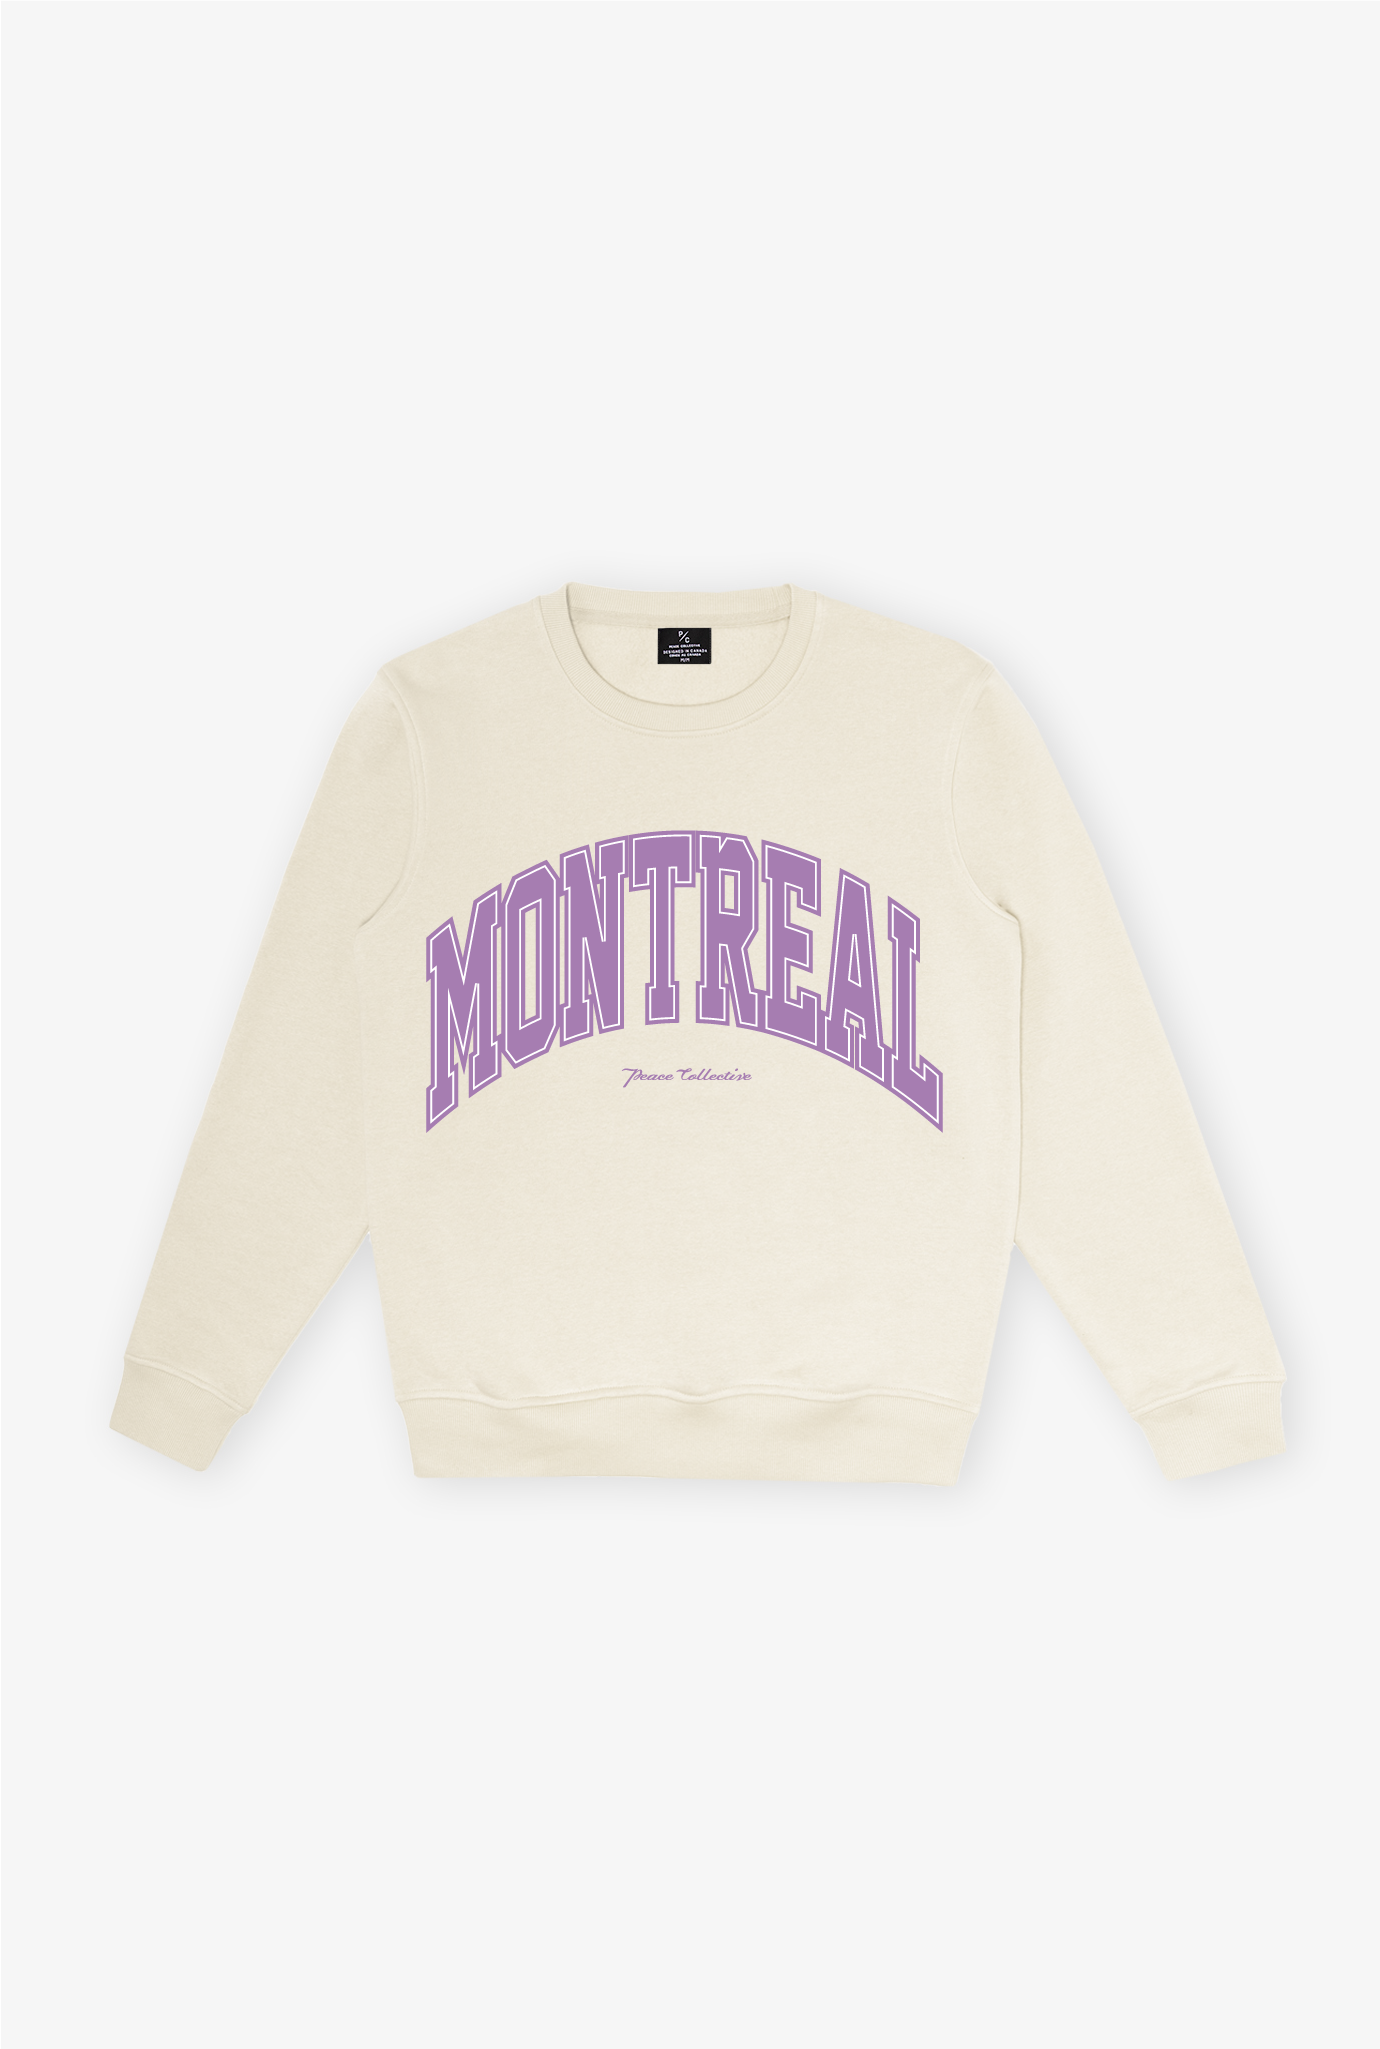 Montreal Vintage Crewneck - Ivory